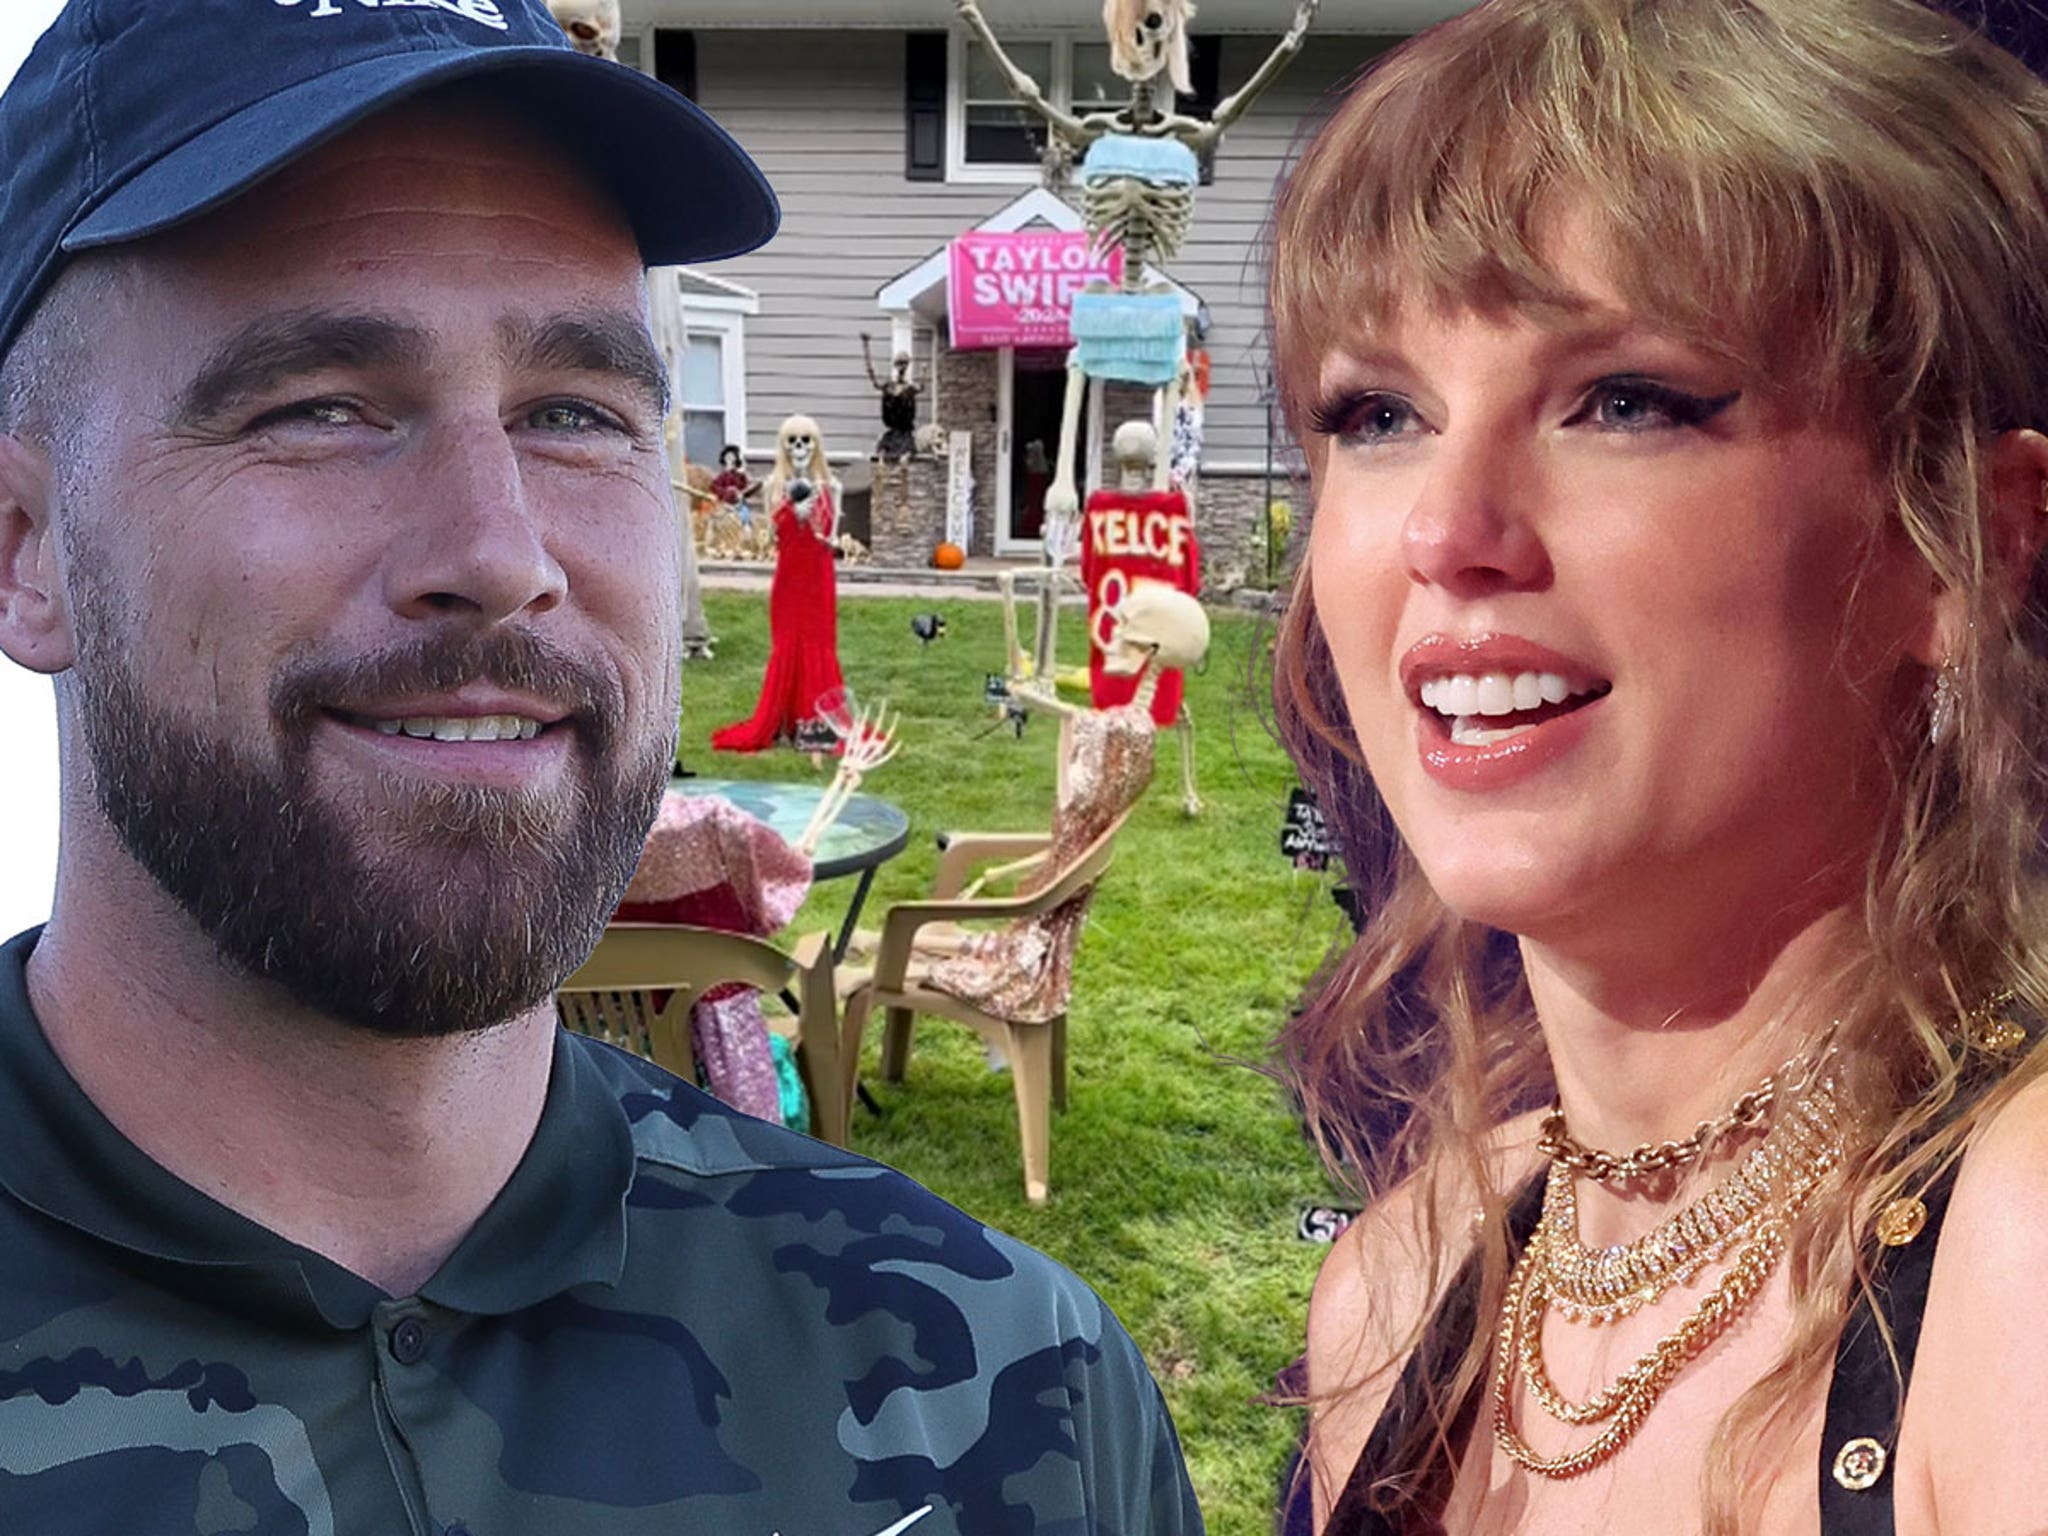 Taylor Swift fan dresses up Halloween decorations as different Swift eras